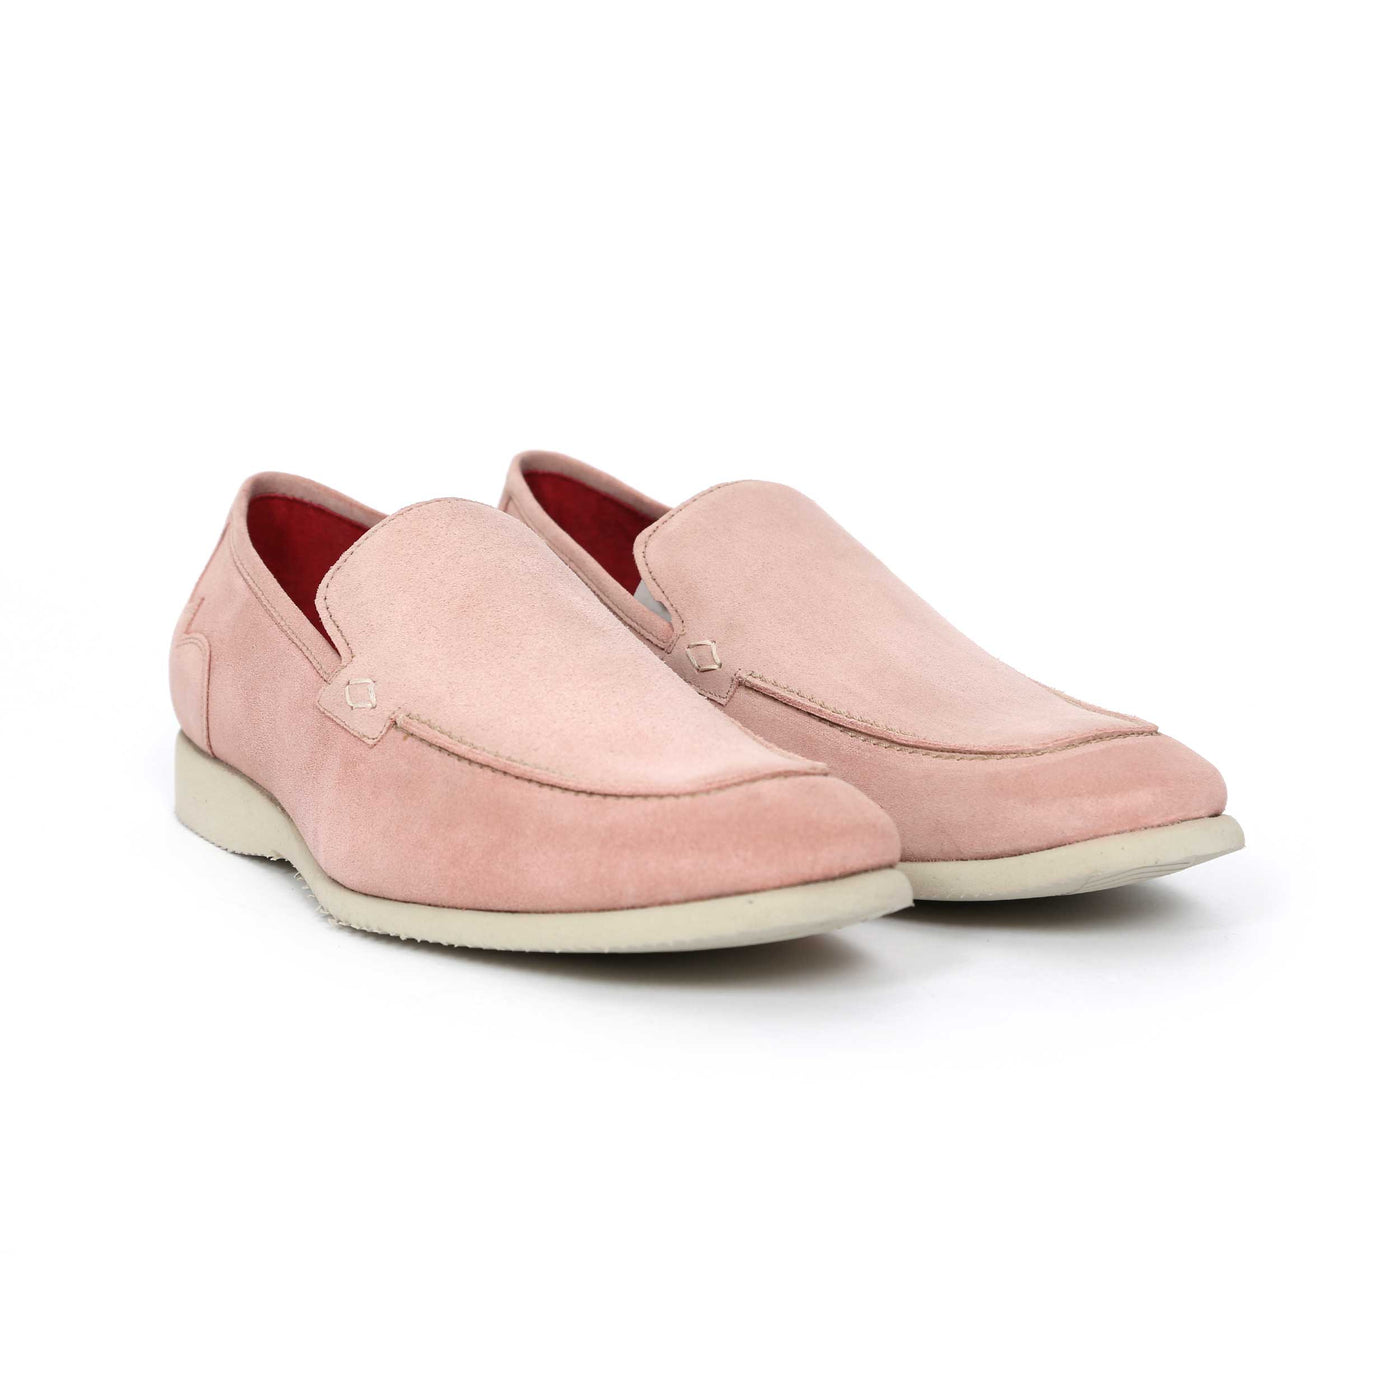 Jeffery West Jung Shoe in Light Pink Suede Pair